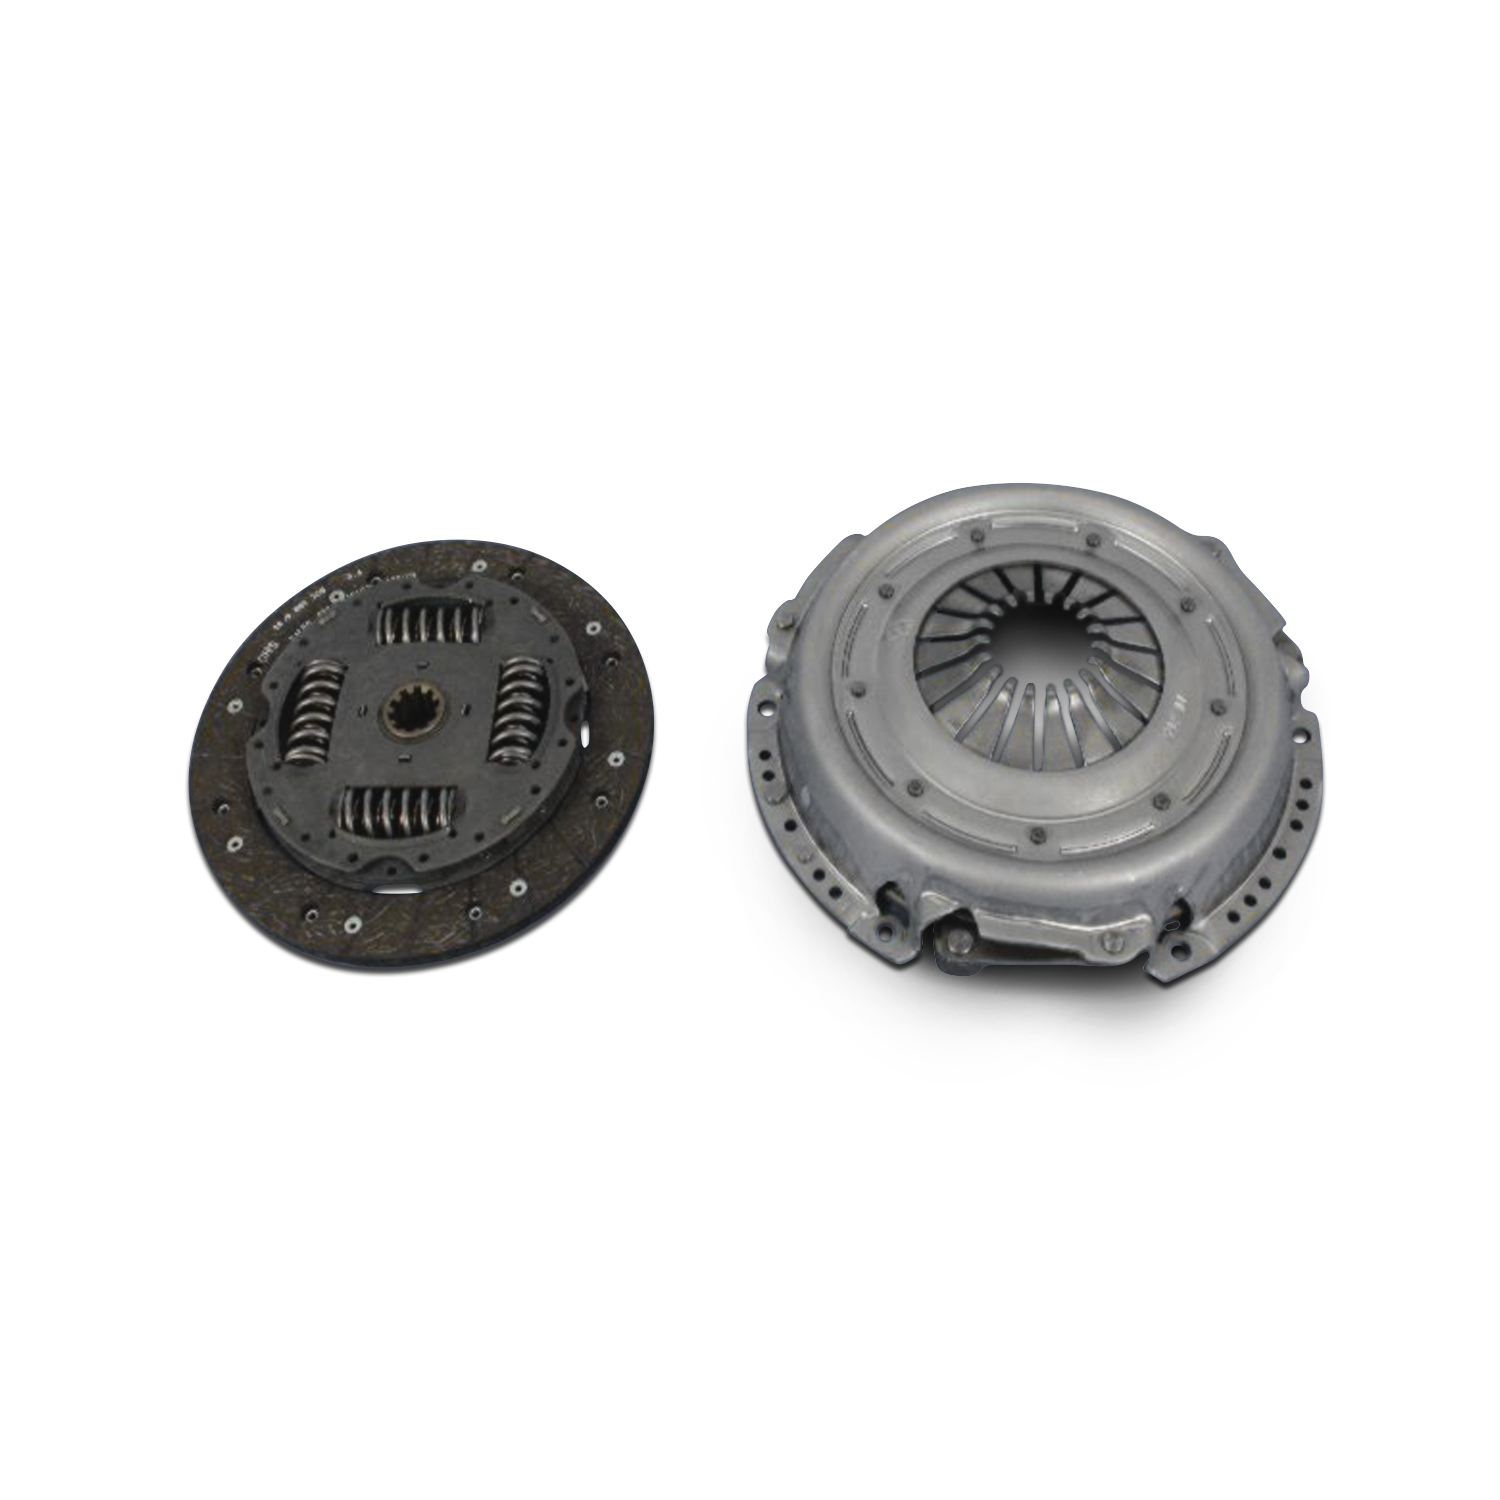 MOPAR PARTS - Clutch Pressure Plate And Disc Set - MOP 52104732AC